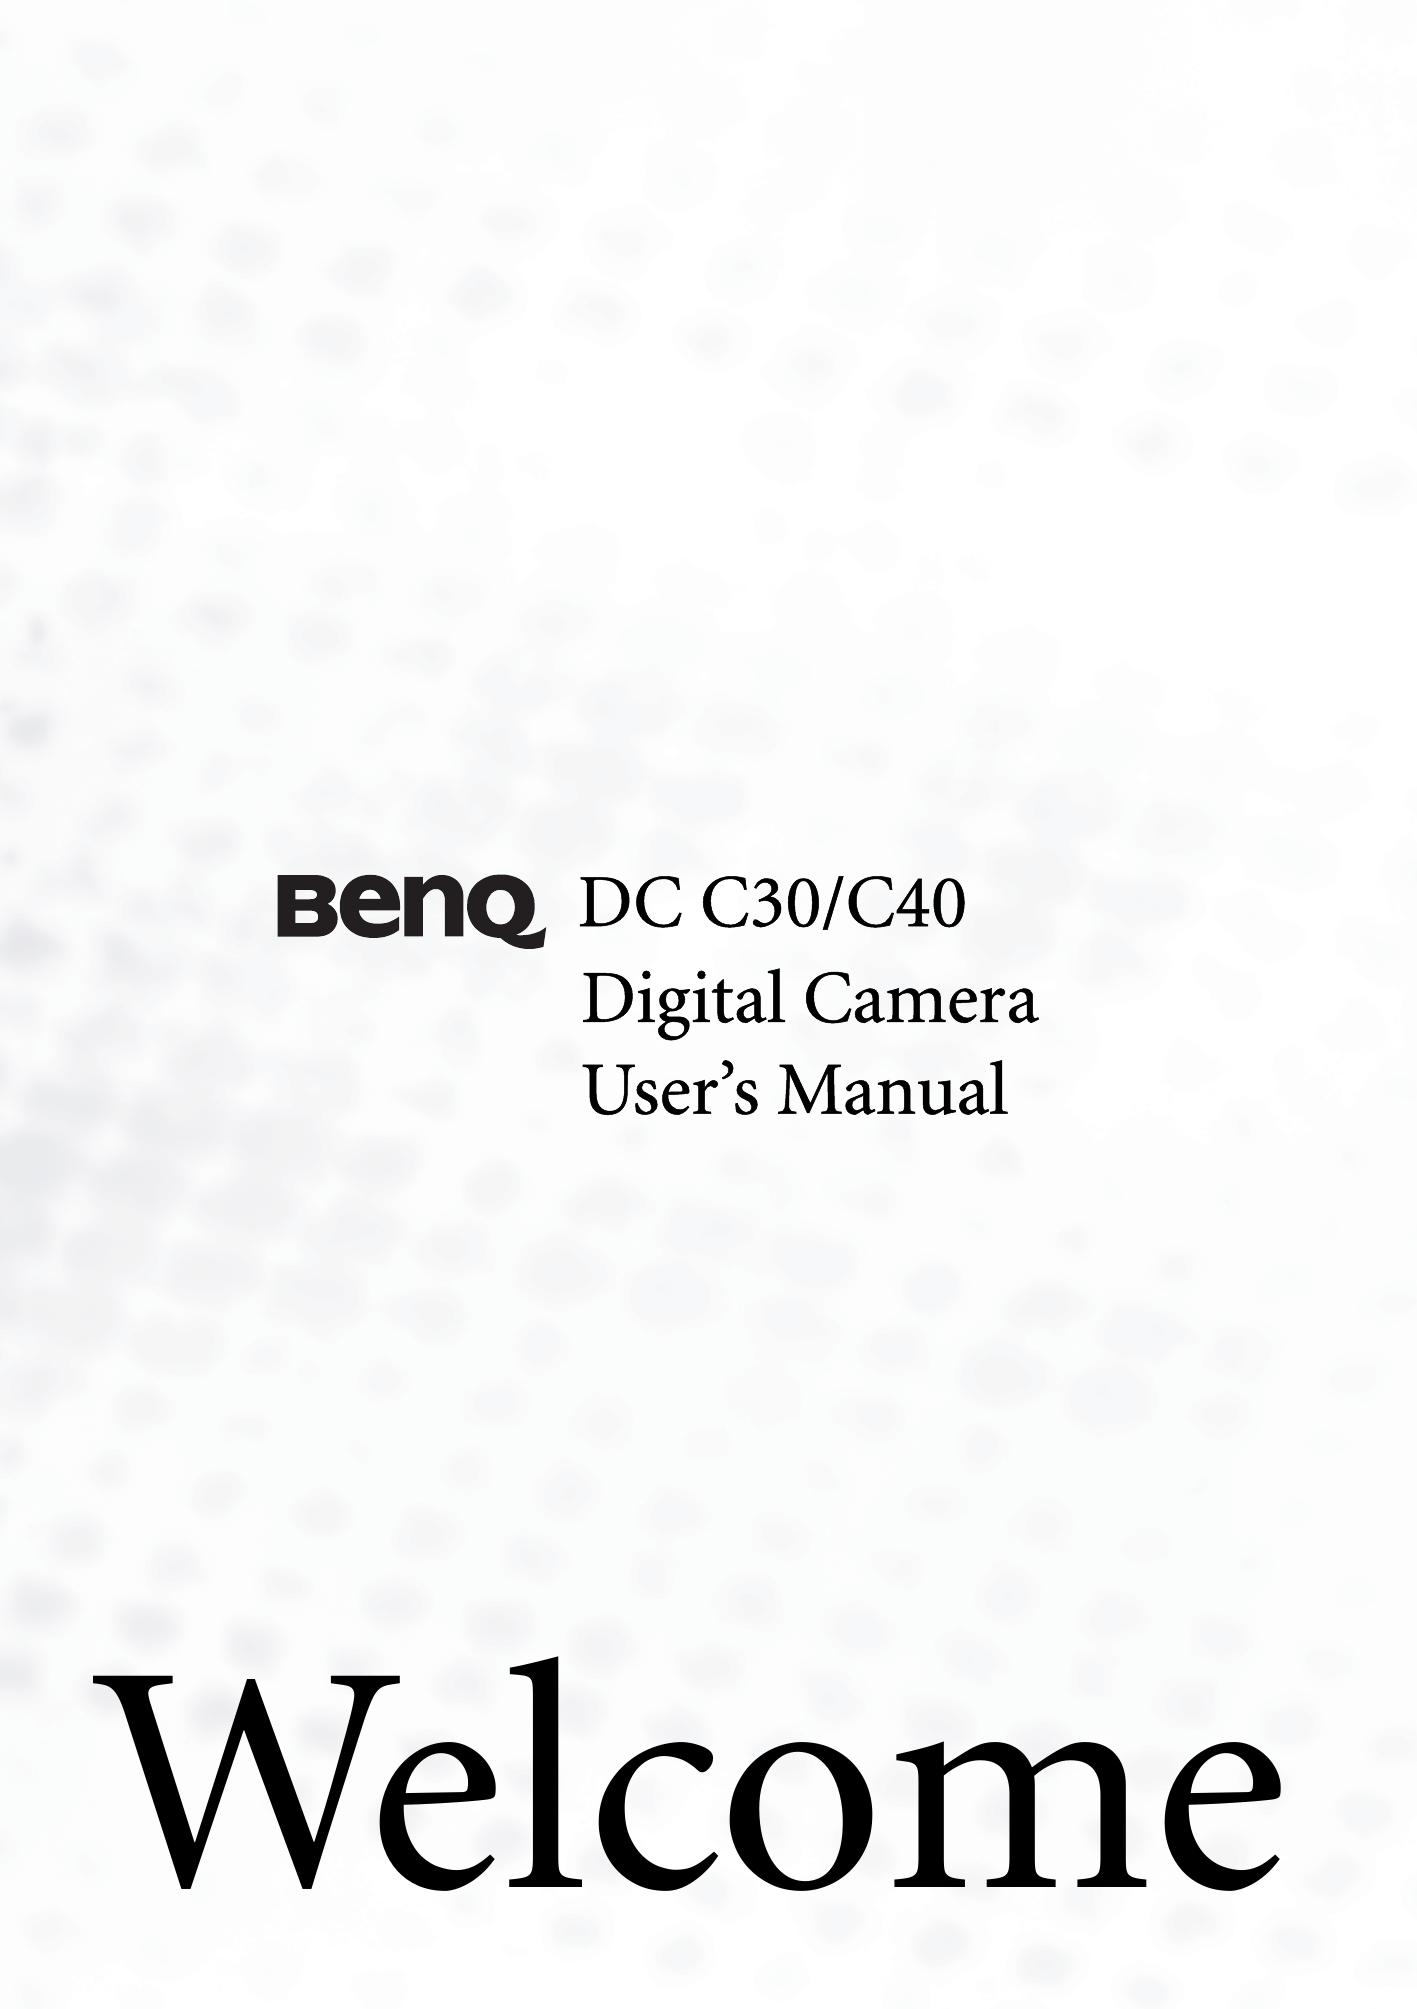 BenQ DC C30 Digital Camera User Manual